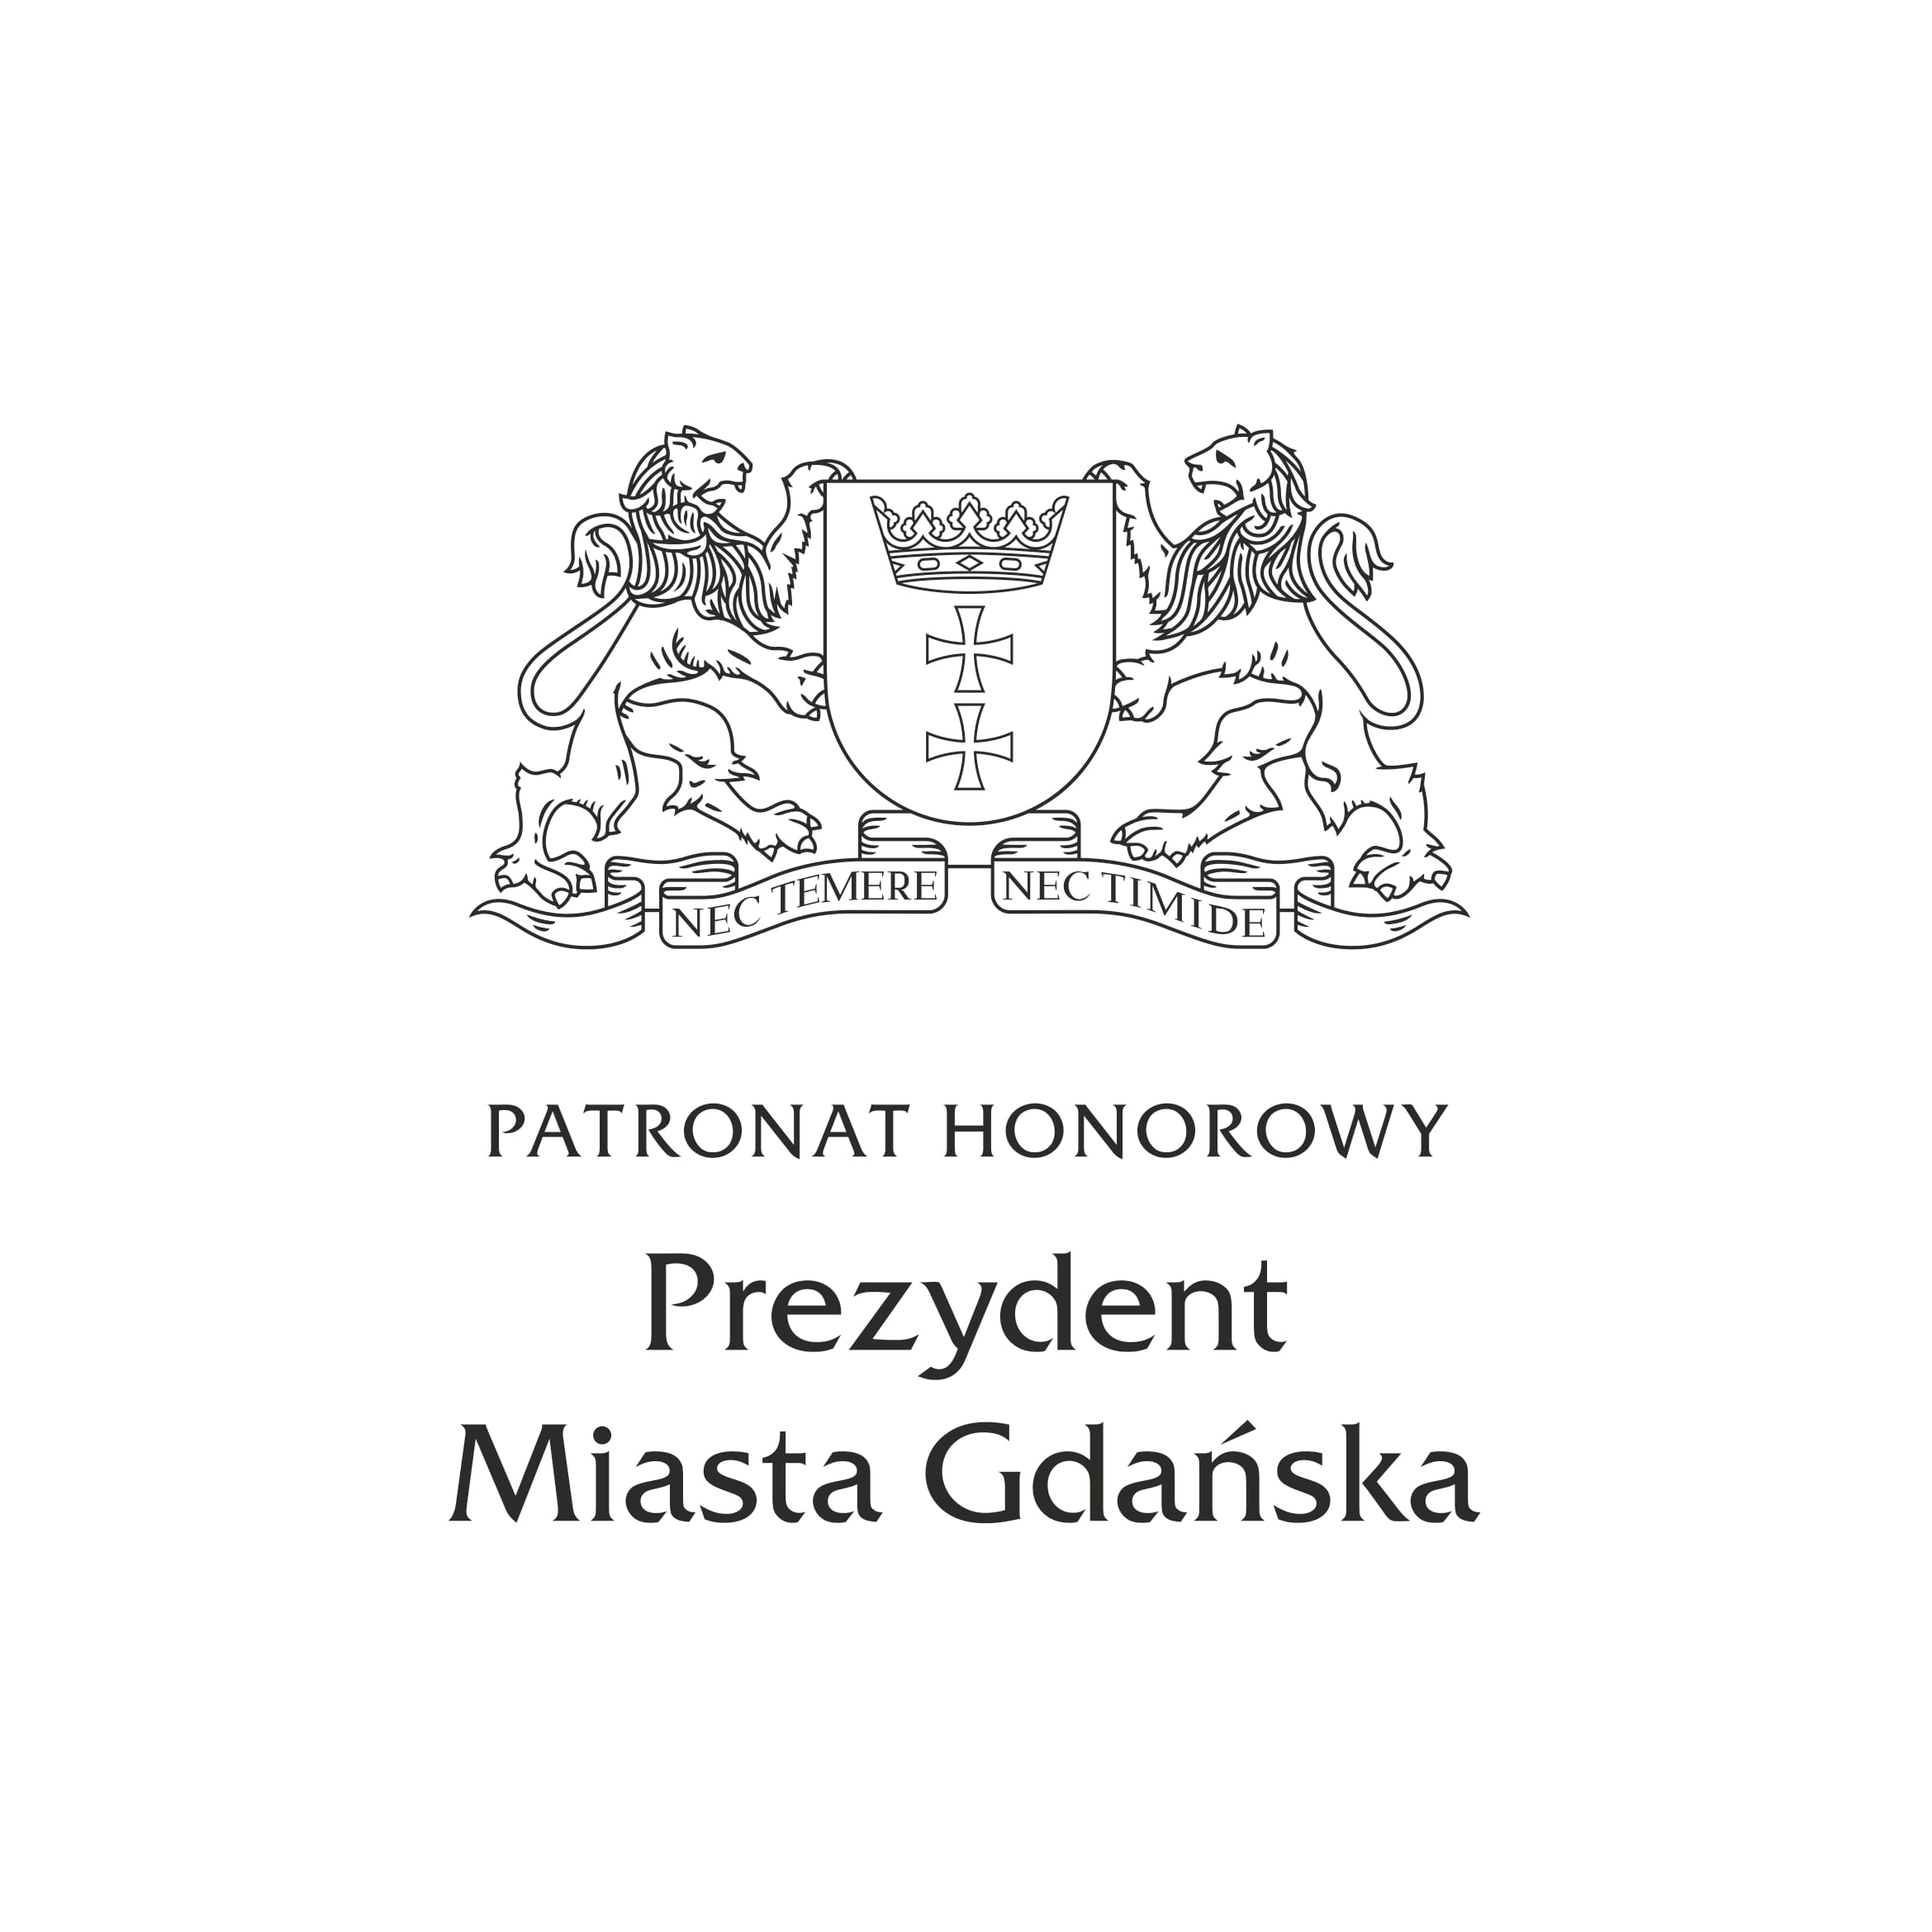 The Mayor of the City of Gdańsk, Mrs Aleksandra Dulkiewicz